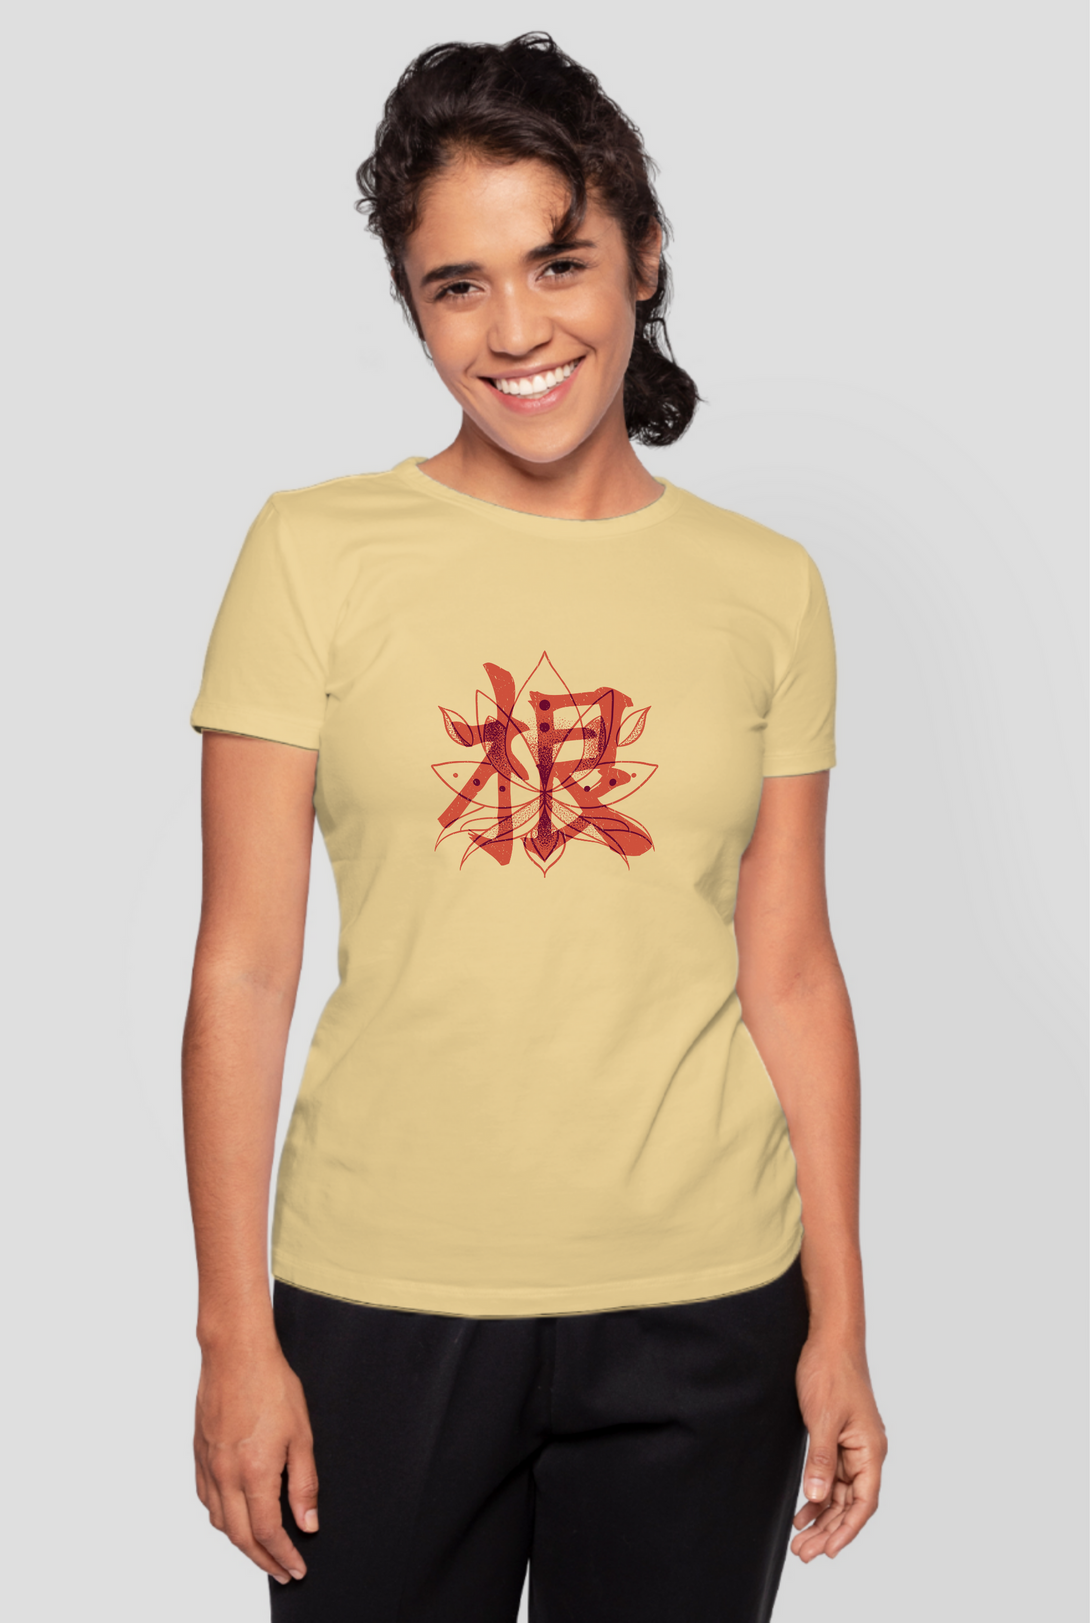 Blossom Zen Lotus Printed T-Shirt For Women - WowWaves - 11